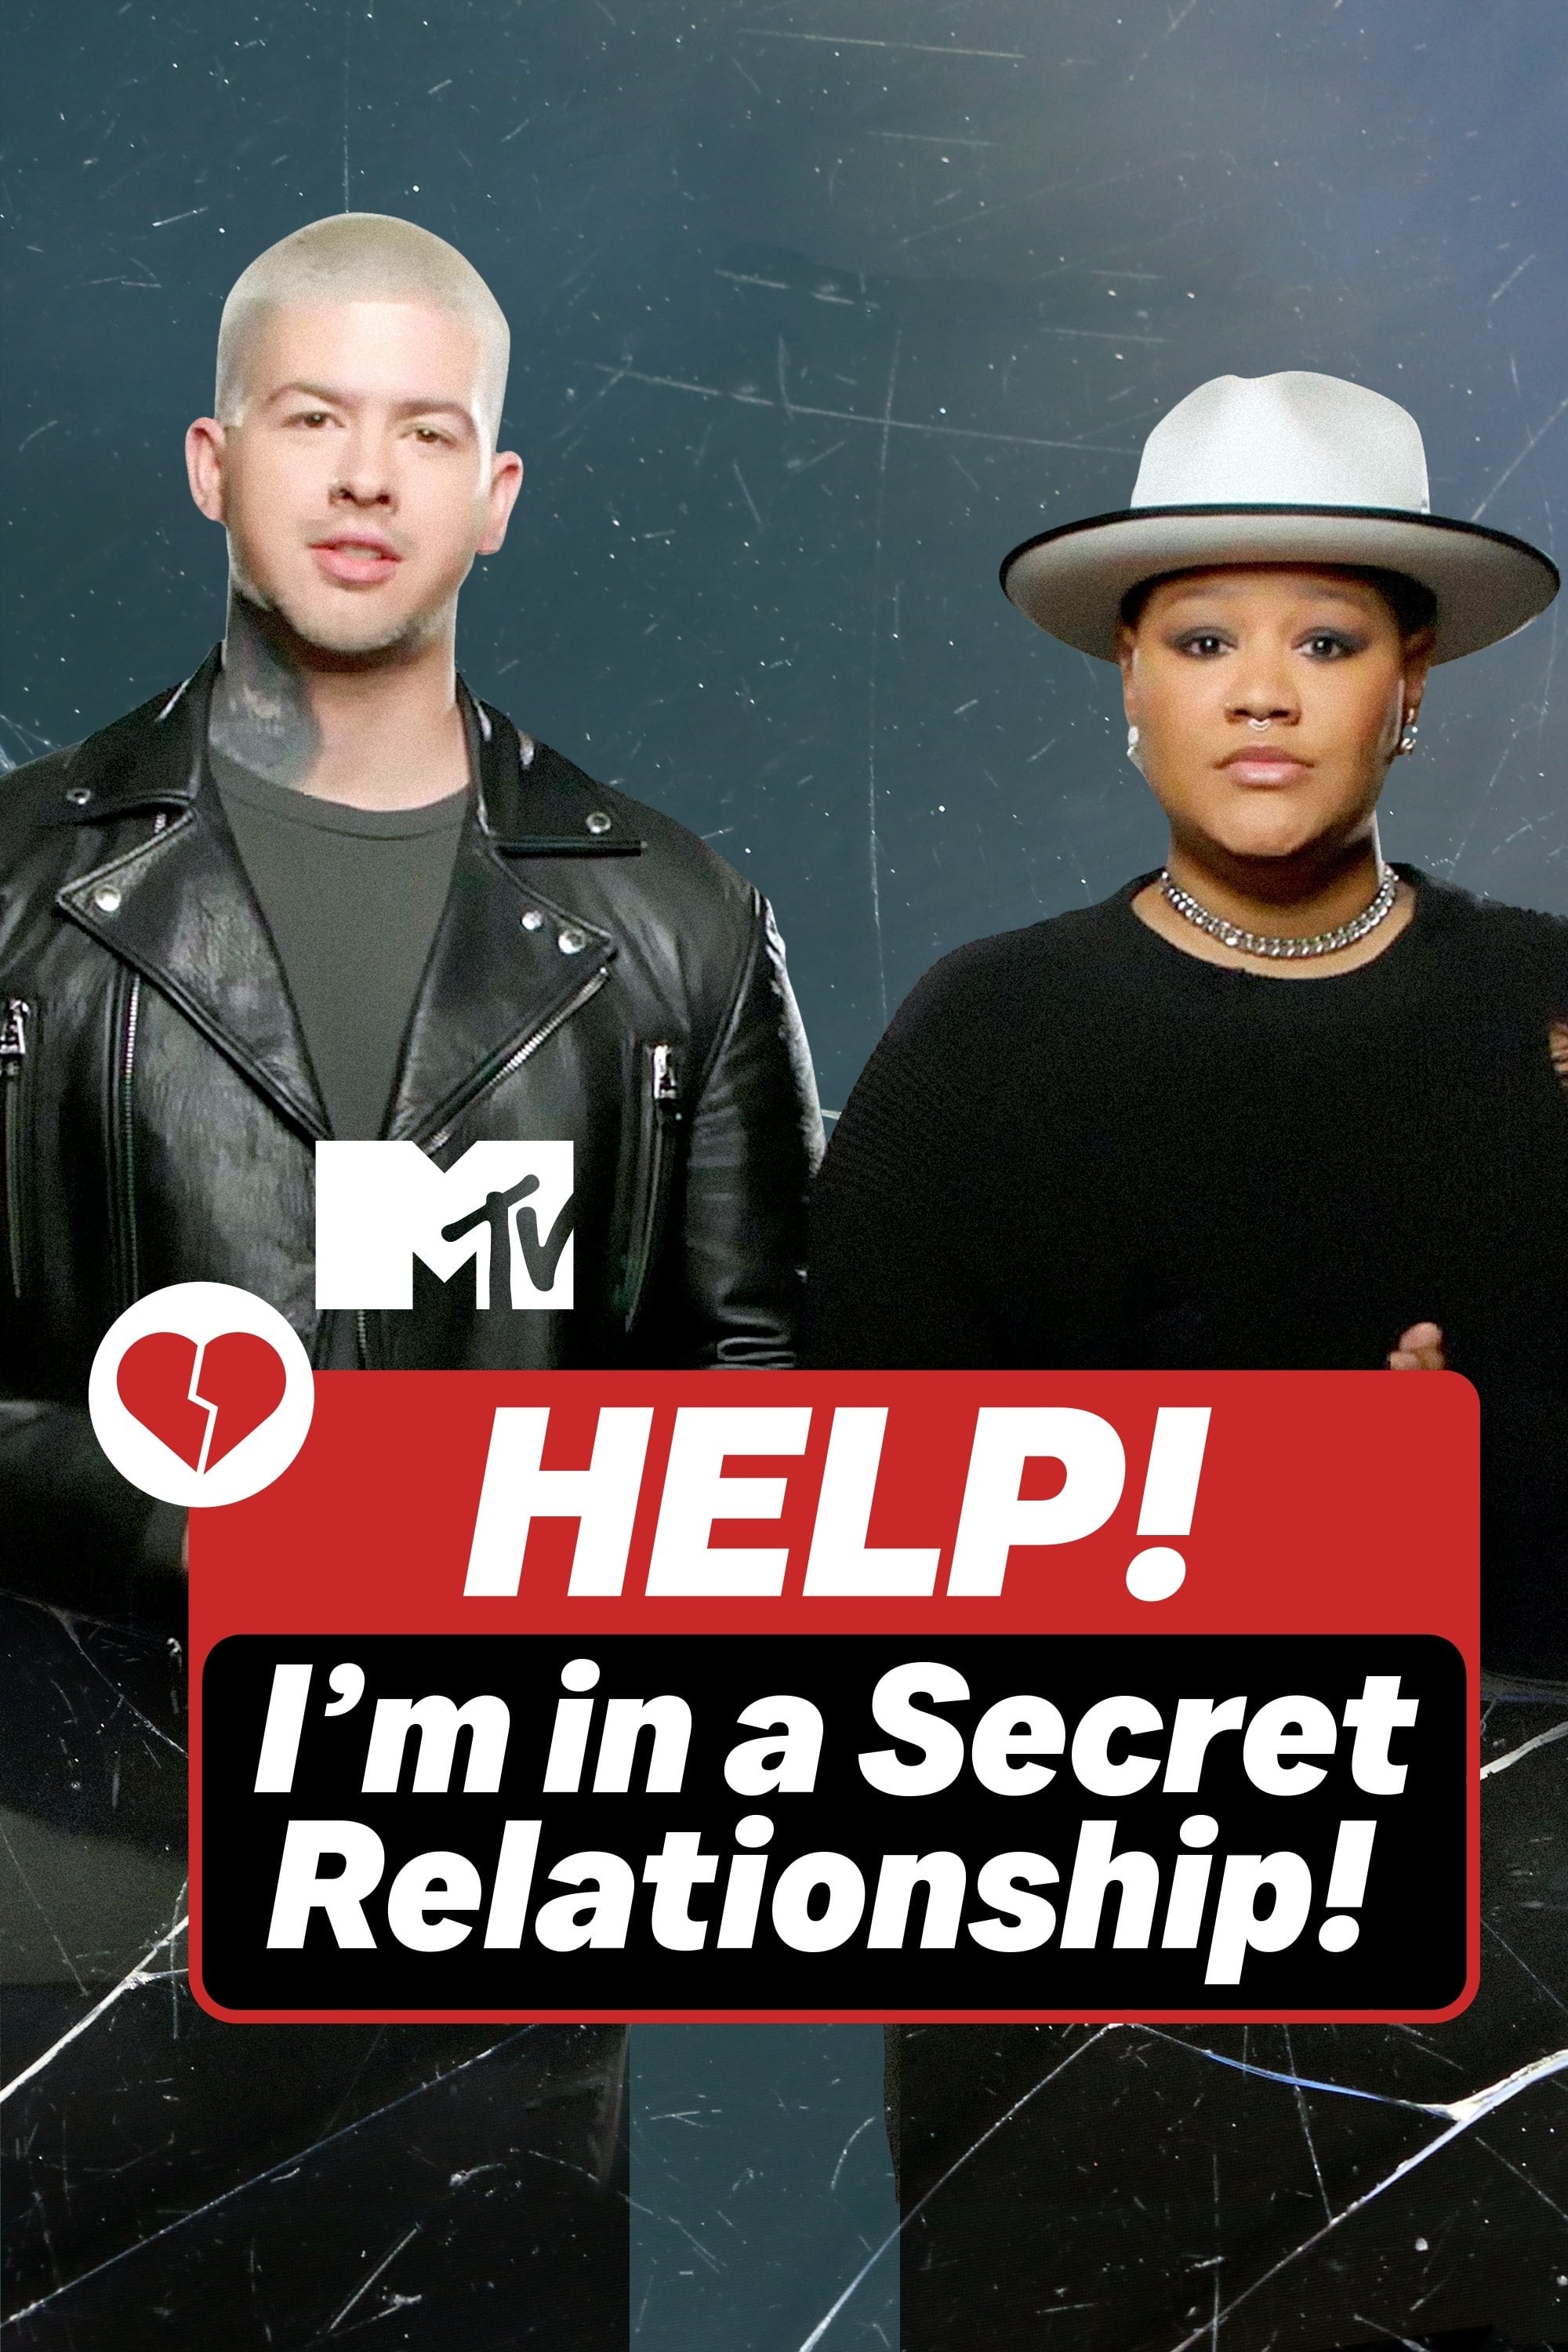 Help! I'm in a Secret Relationship! TV Shows About Secret